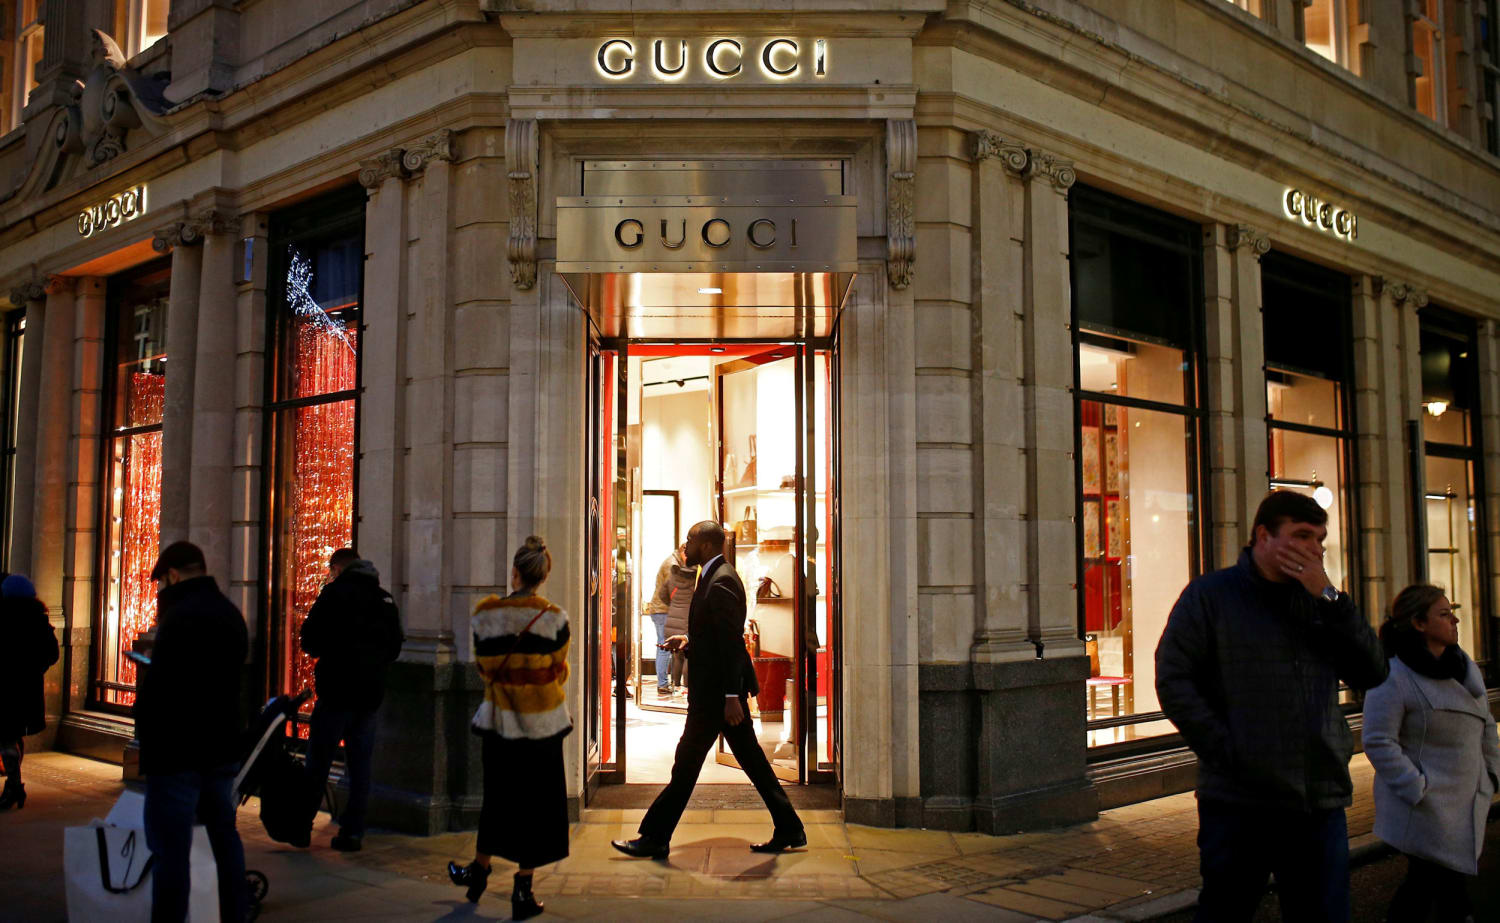 Gucci to step up diversity hiring after 'blackface' uproar